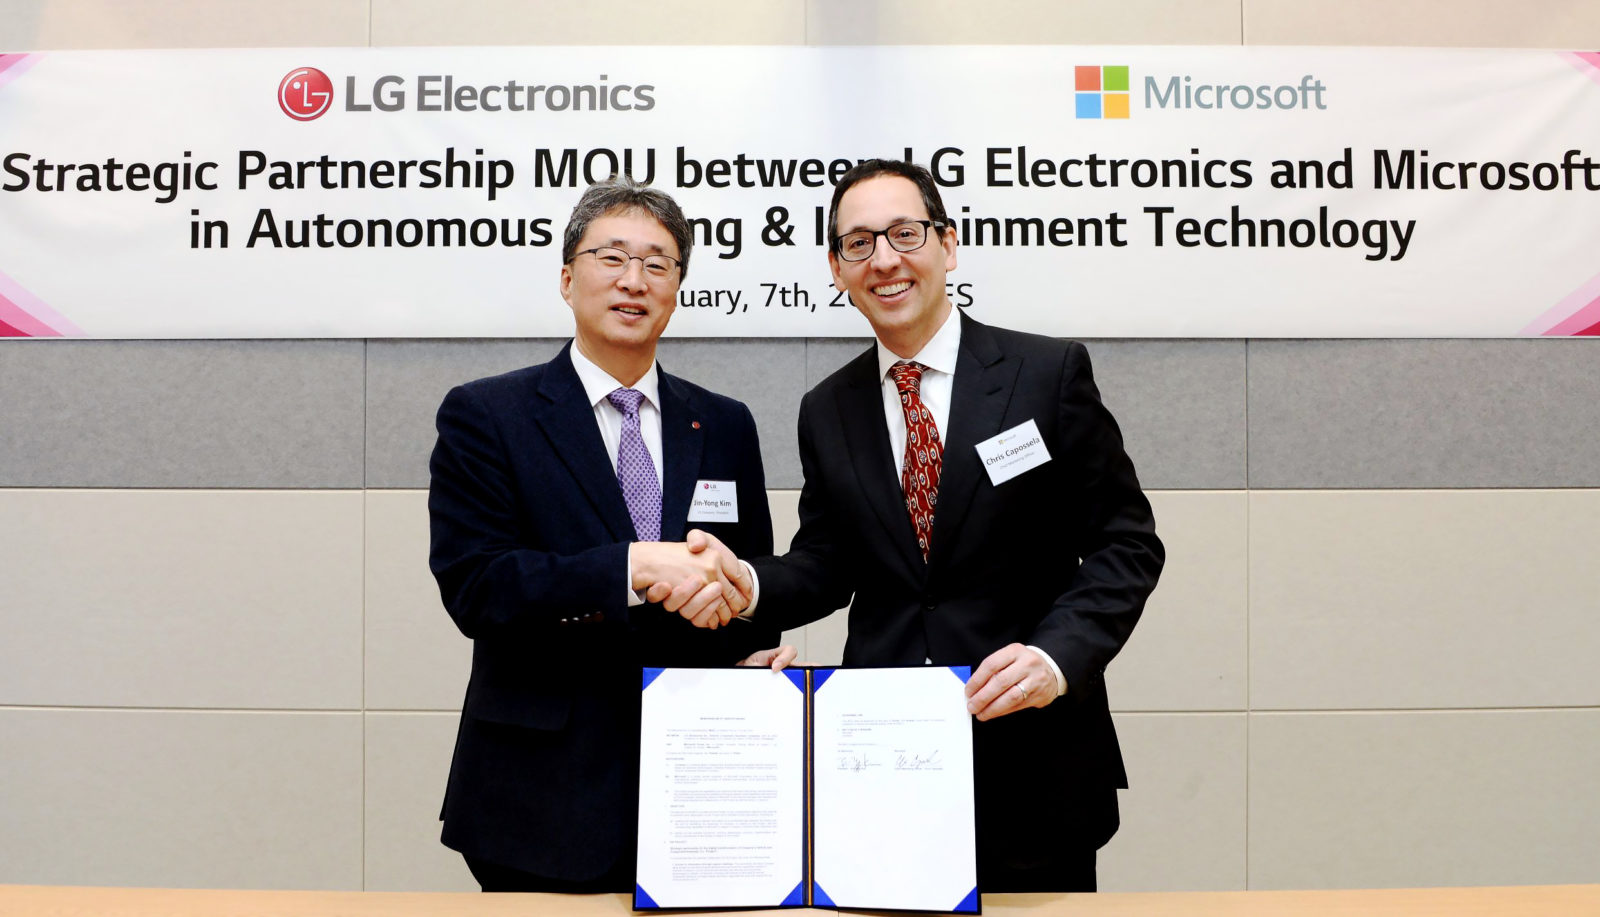 MS and LG stragetic Partnership